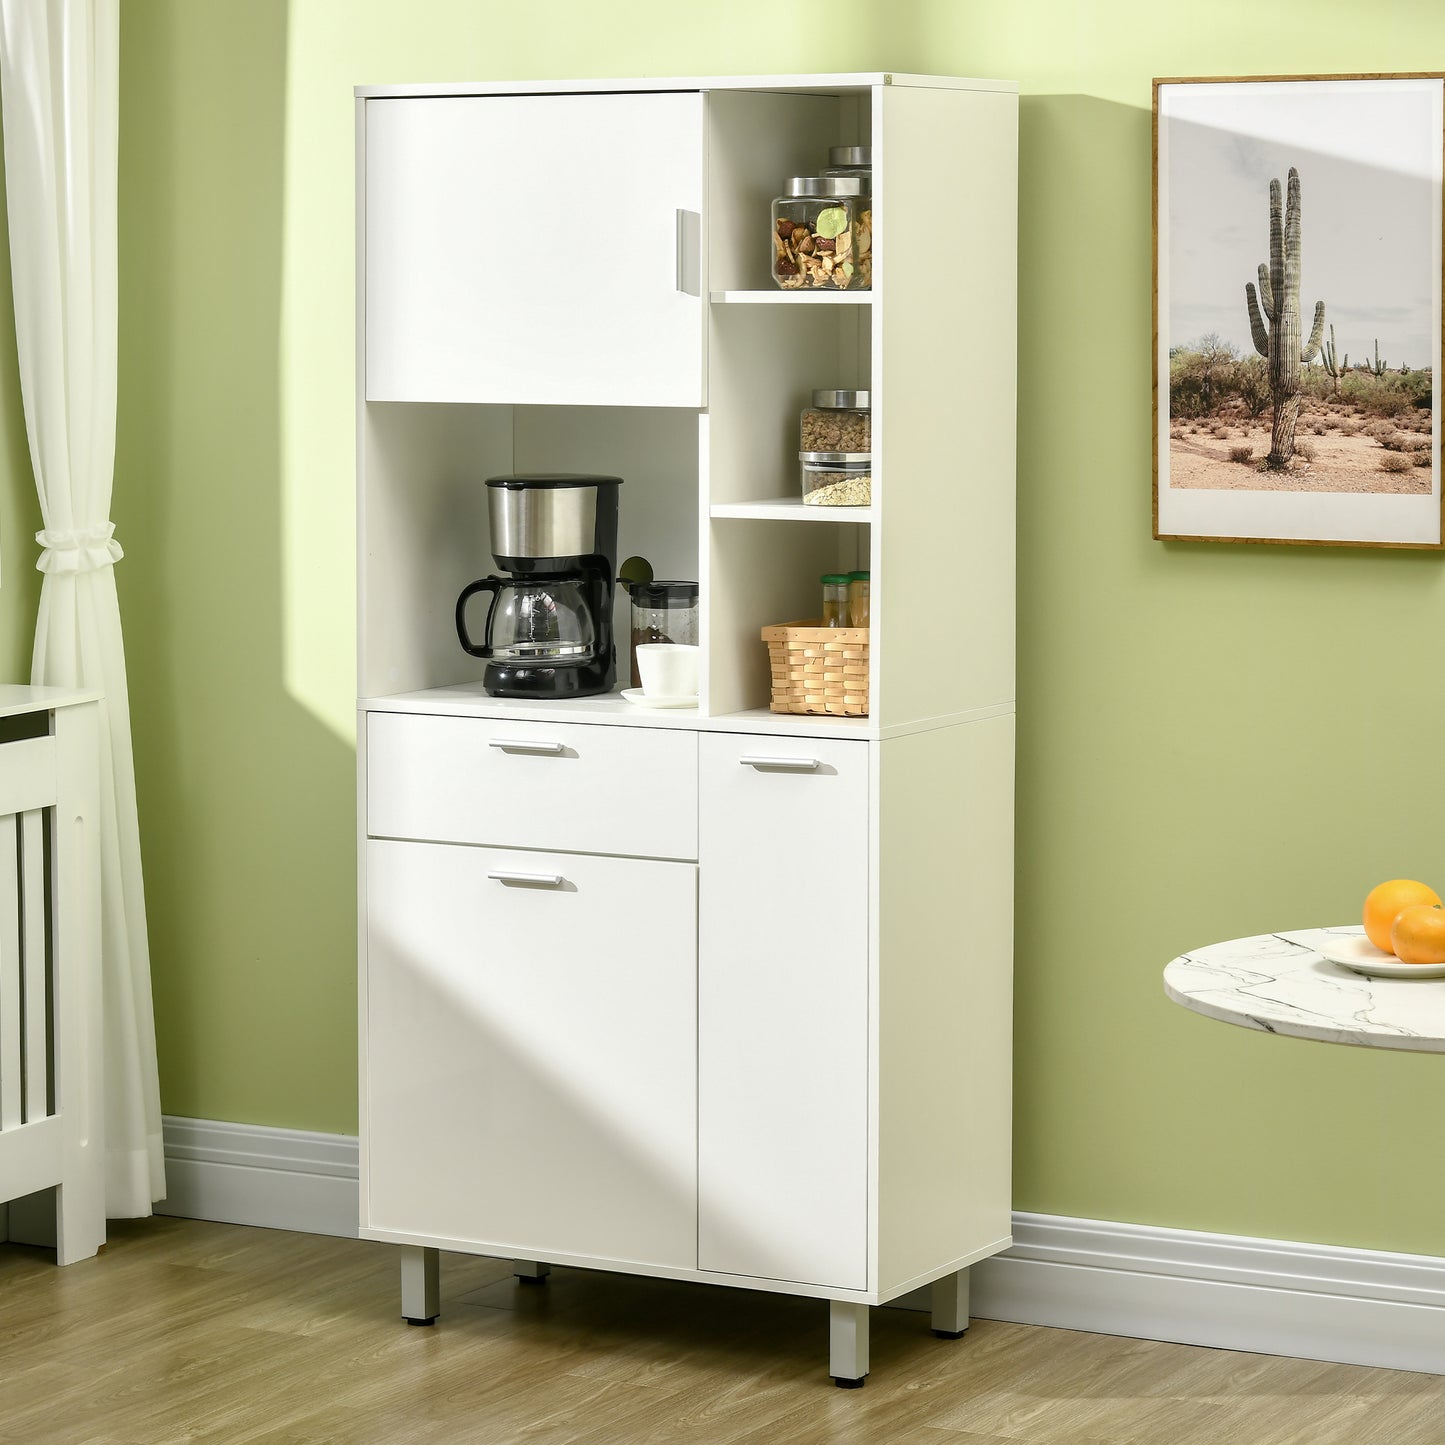 HOMCOM 166cm Modern Freestanding Kitchen Cupboard, Storage Cabinet with Shelves and Drawer, White